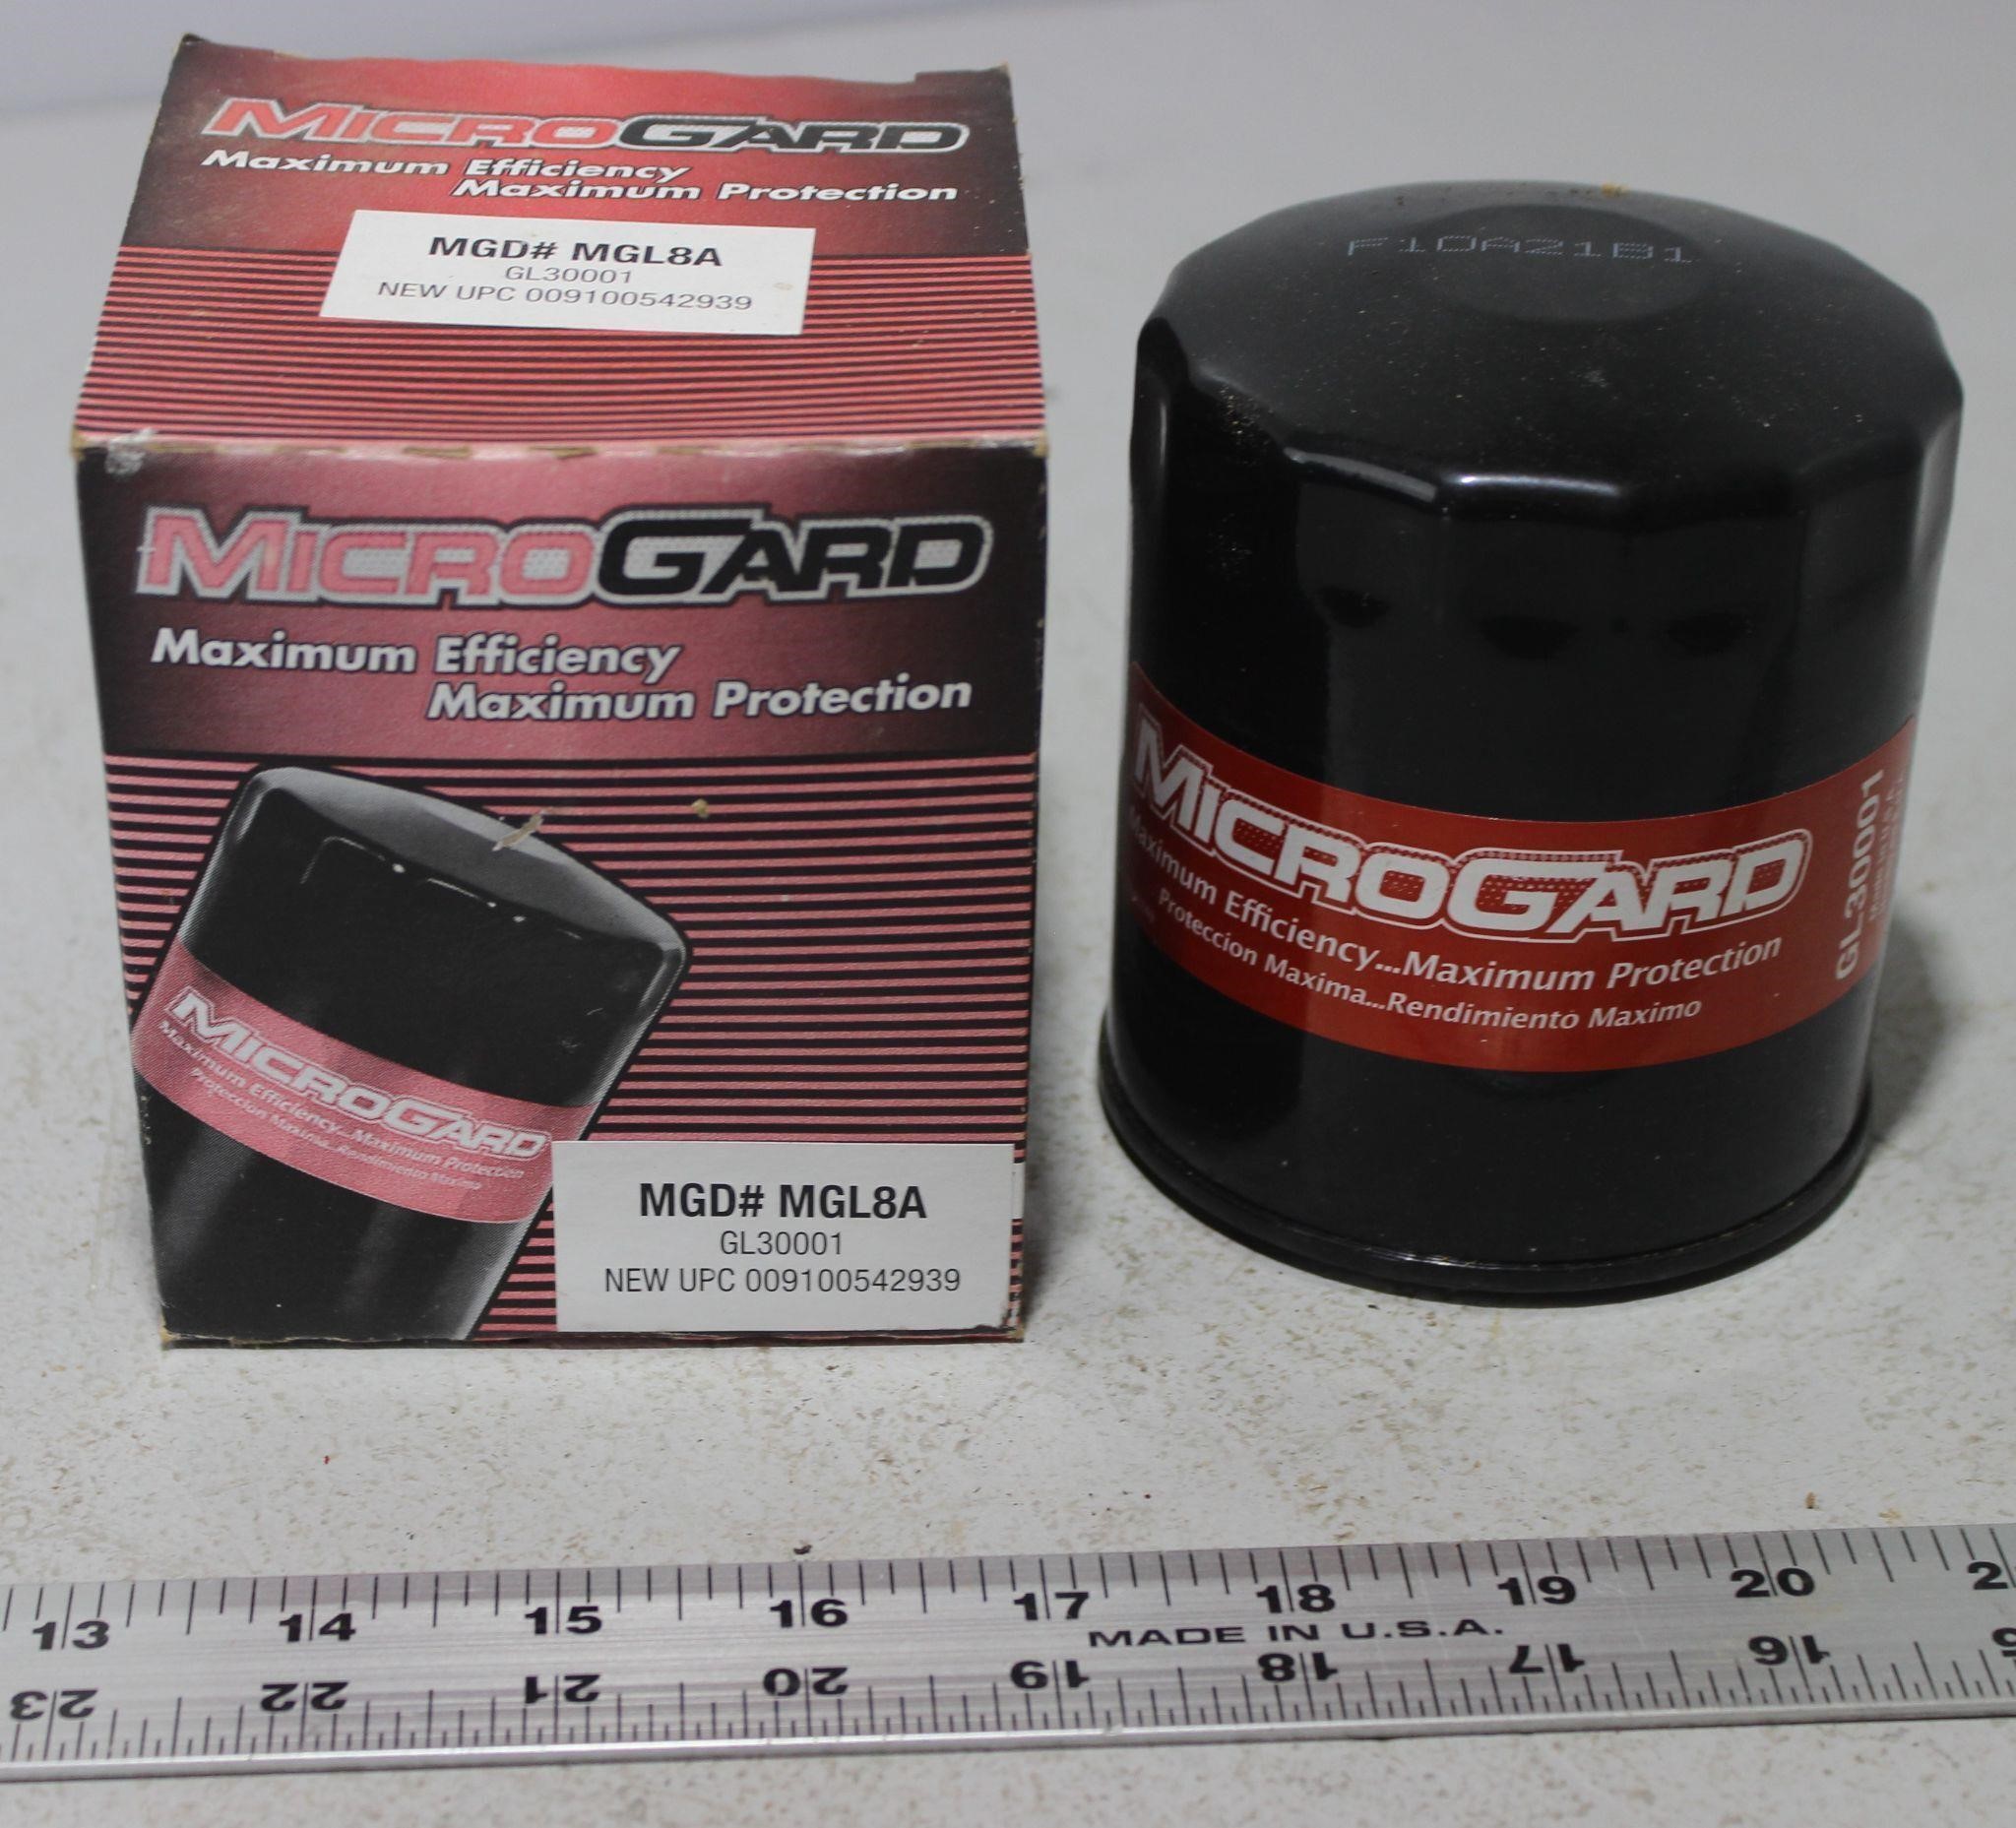 Micro Gard MGD# MGL8A